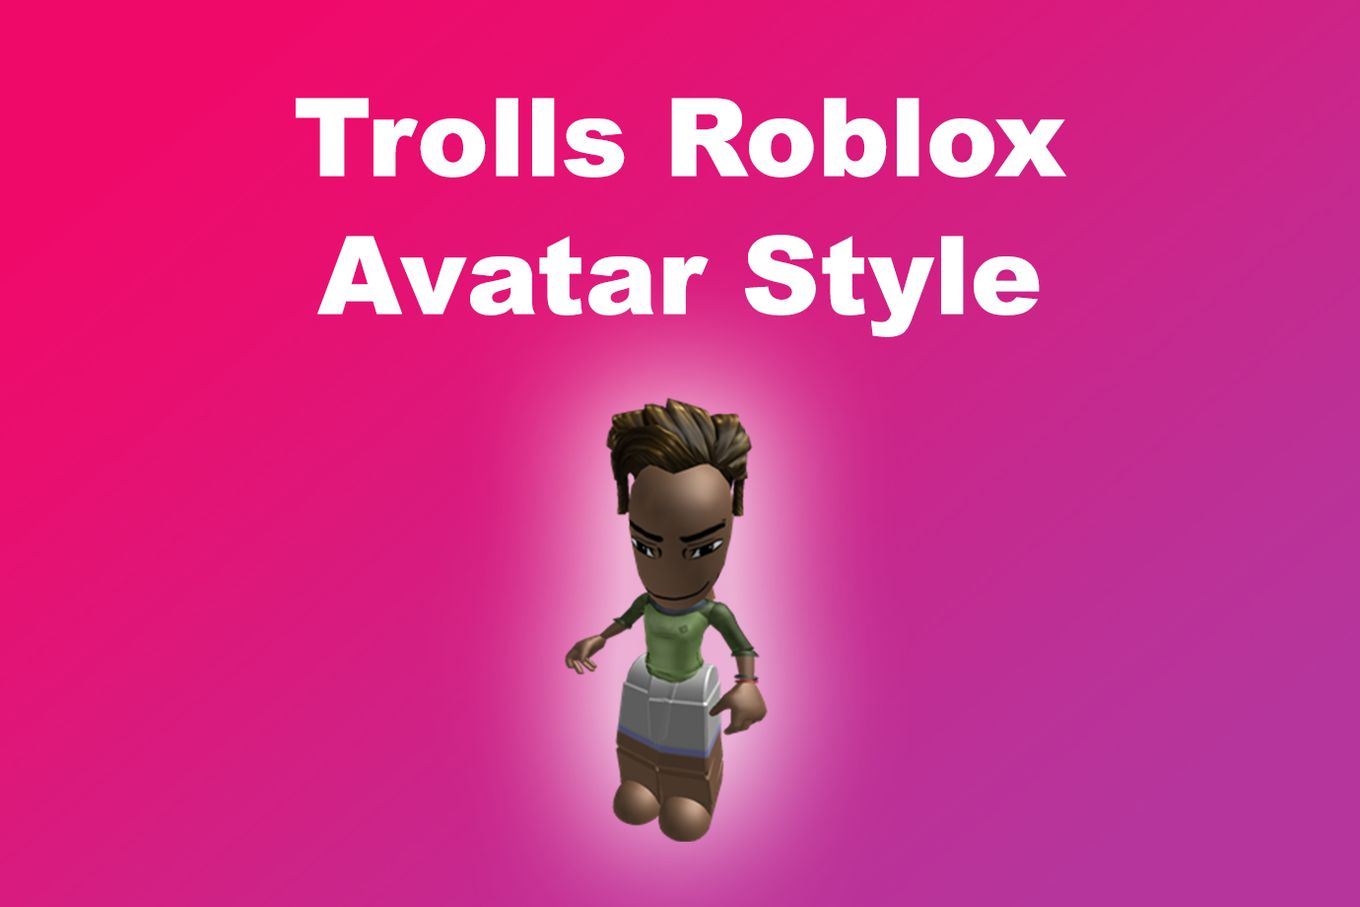 Trolls Roblox Avatar Style